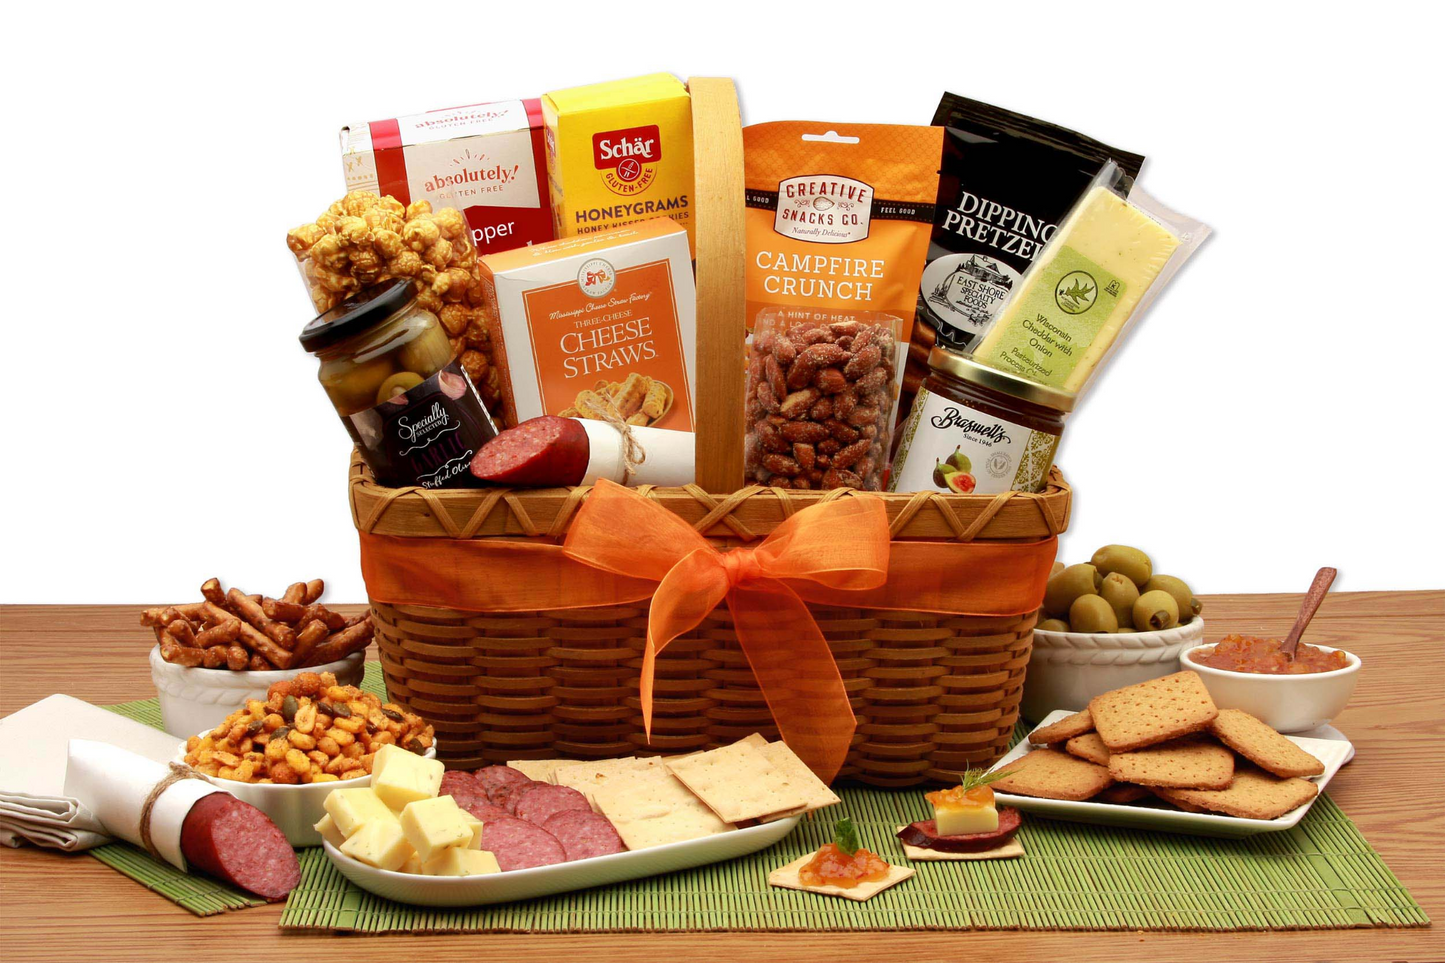 Deluxe Gourmet Picnic Basket Gift Basket - Create Lasting Memories Outdoors